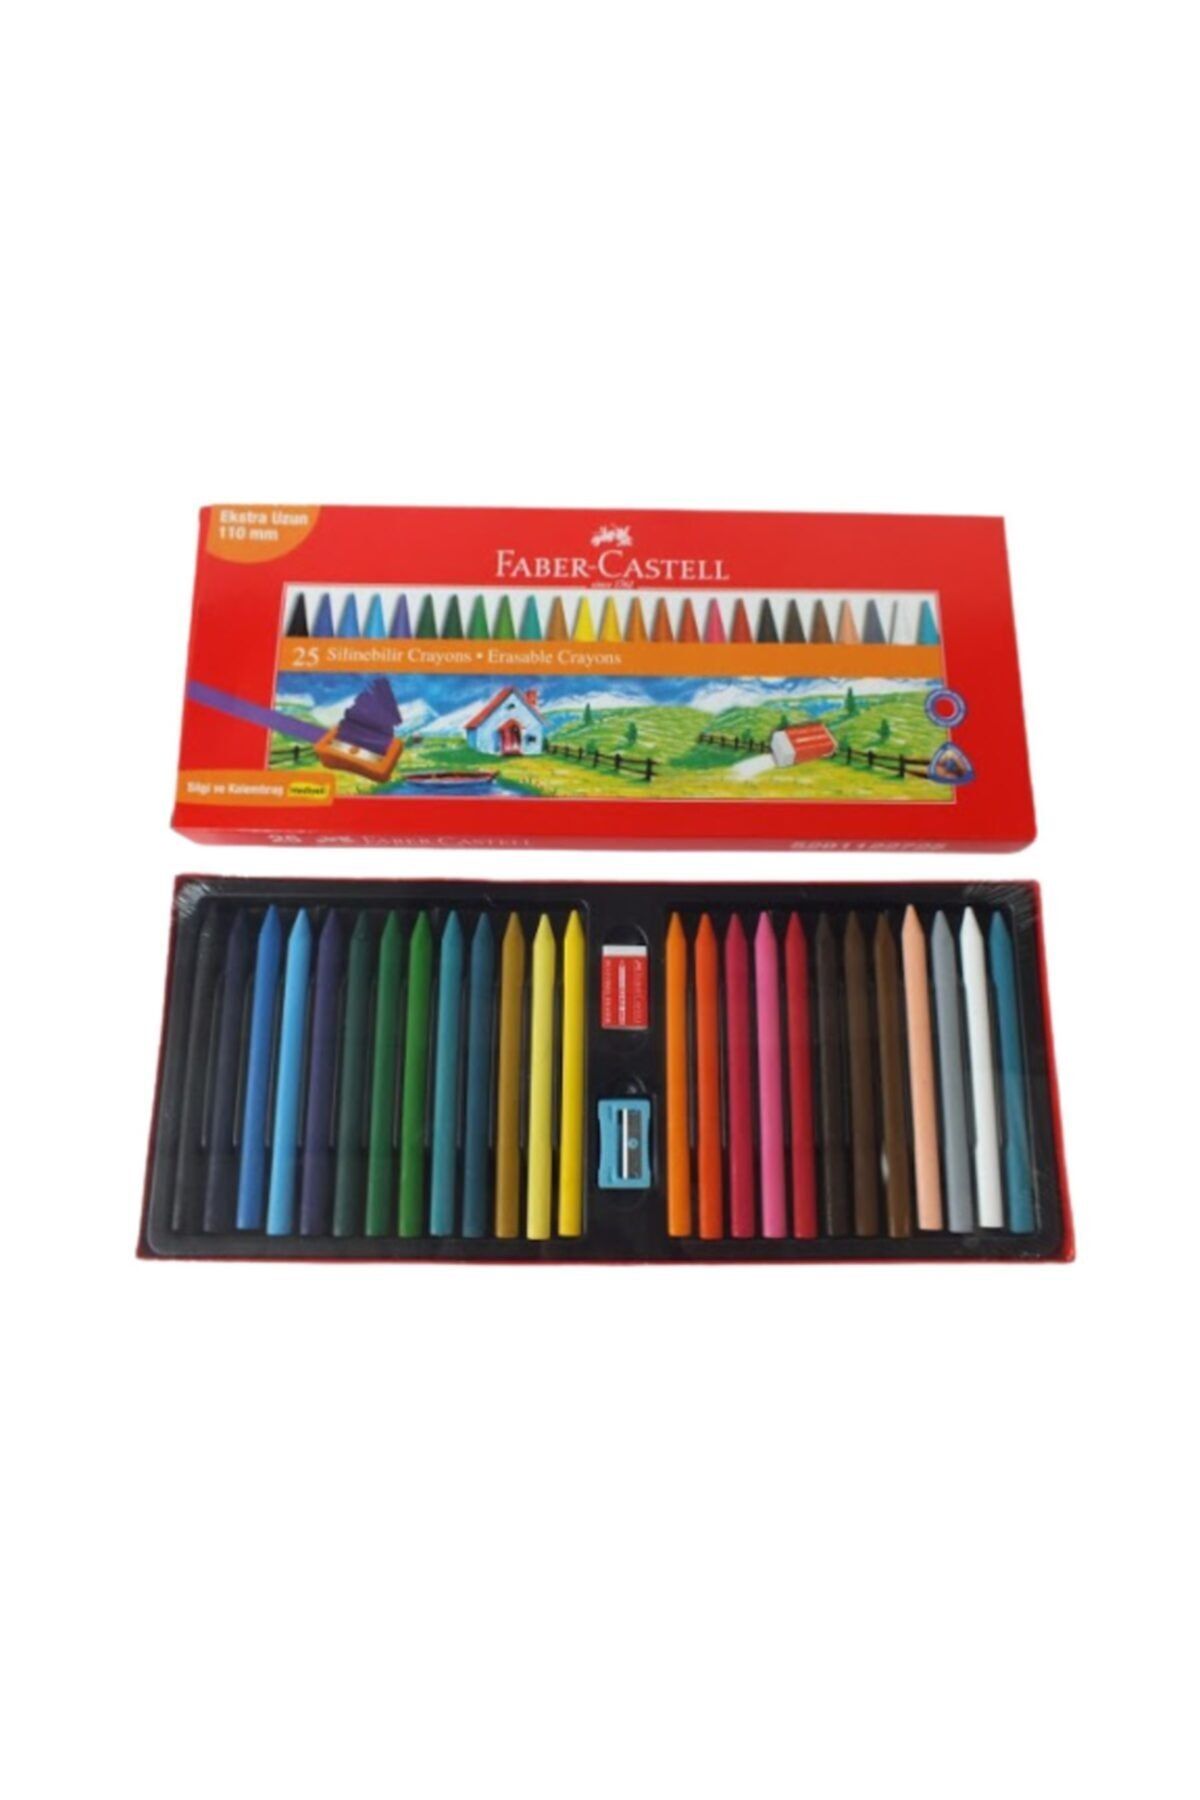 Faber Castell Erasable Crayons Karton Kutu Silinebilir Üçgen Mum Pastel Boya 110 mm